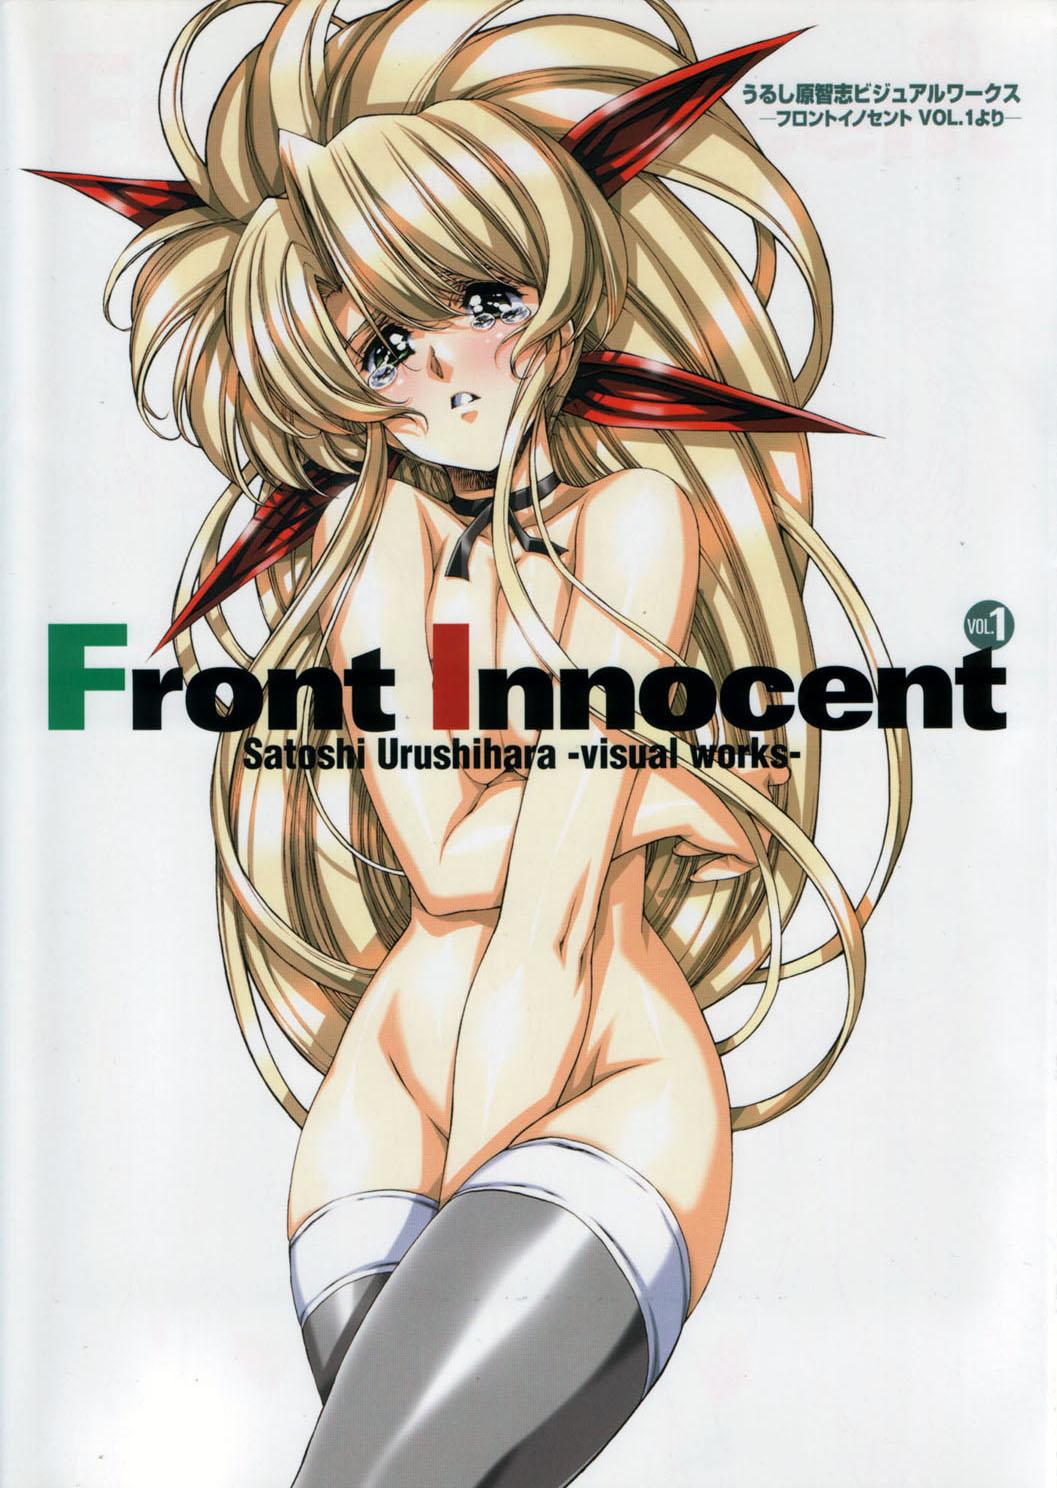 Slim Front Innocent #1: Satoshi Urushihara Visual Works - Another lady innocent Bribe - Page 2